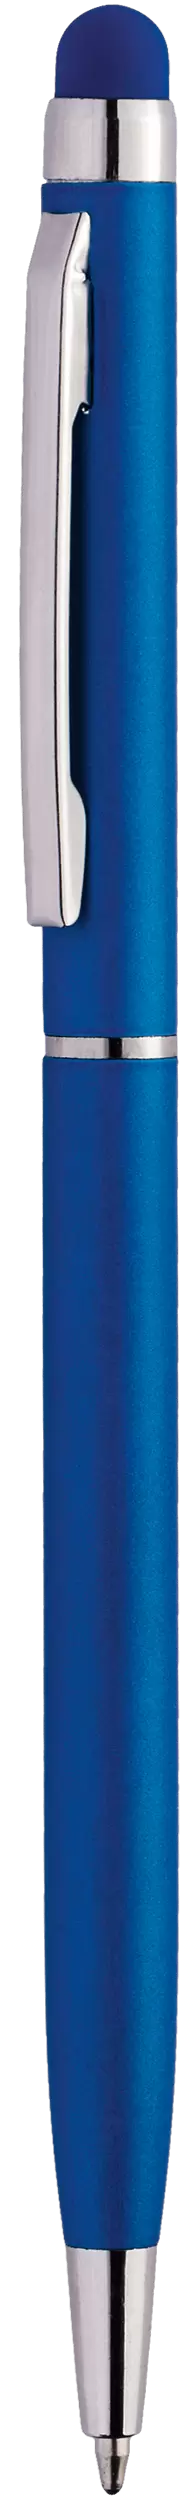 Ручка KENO Синяя 1115-01